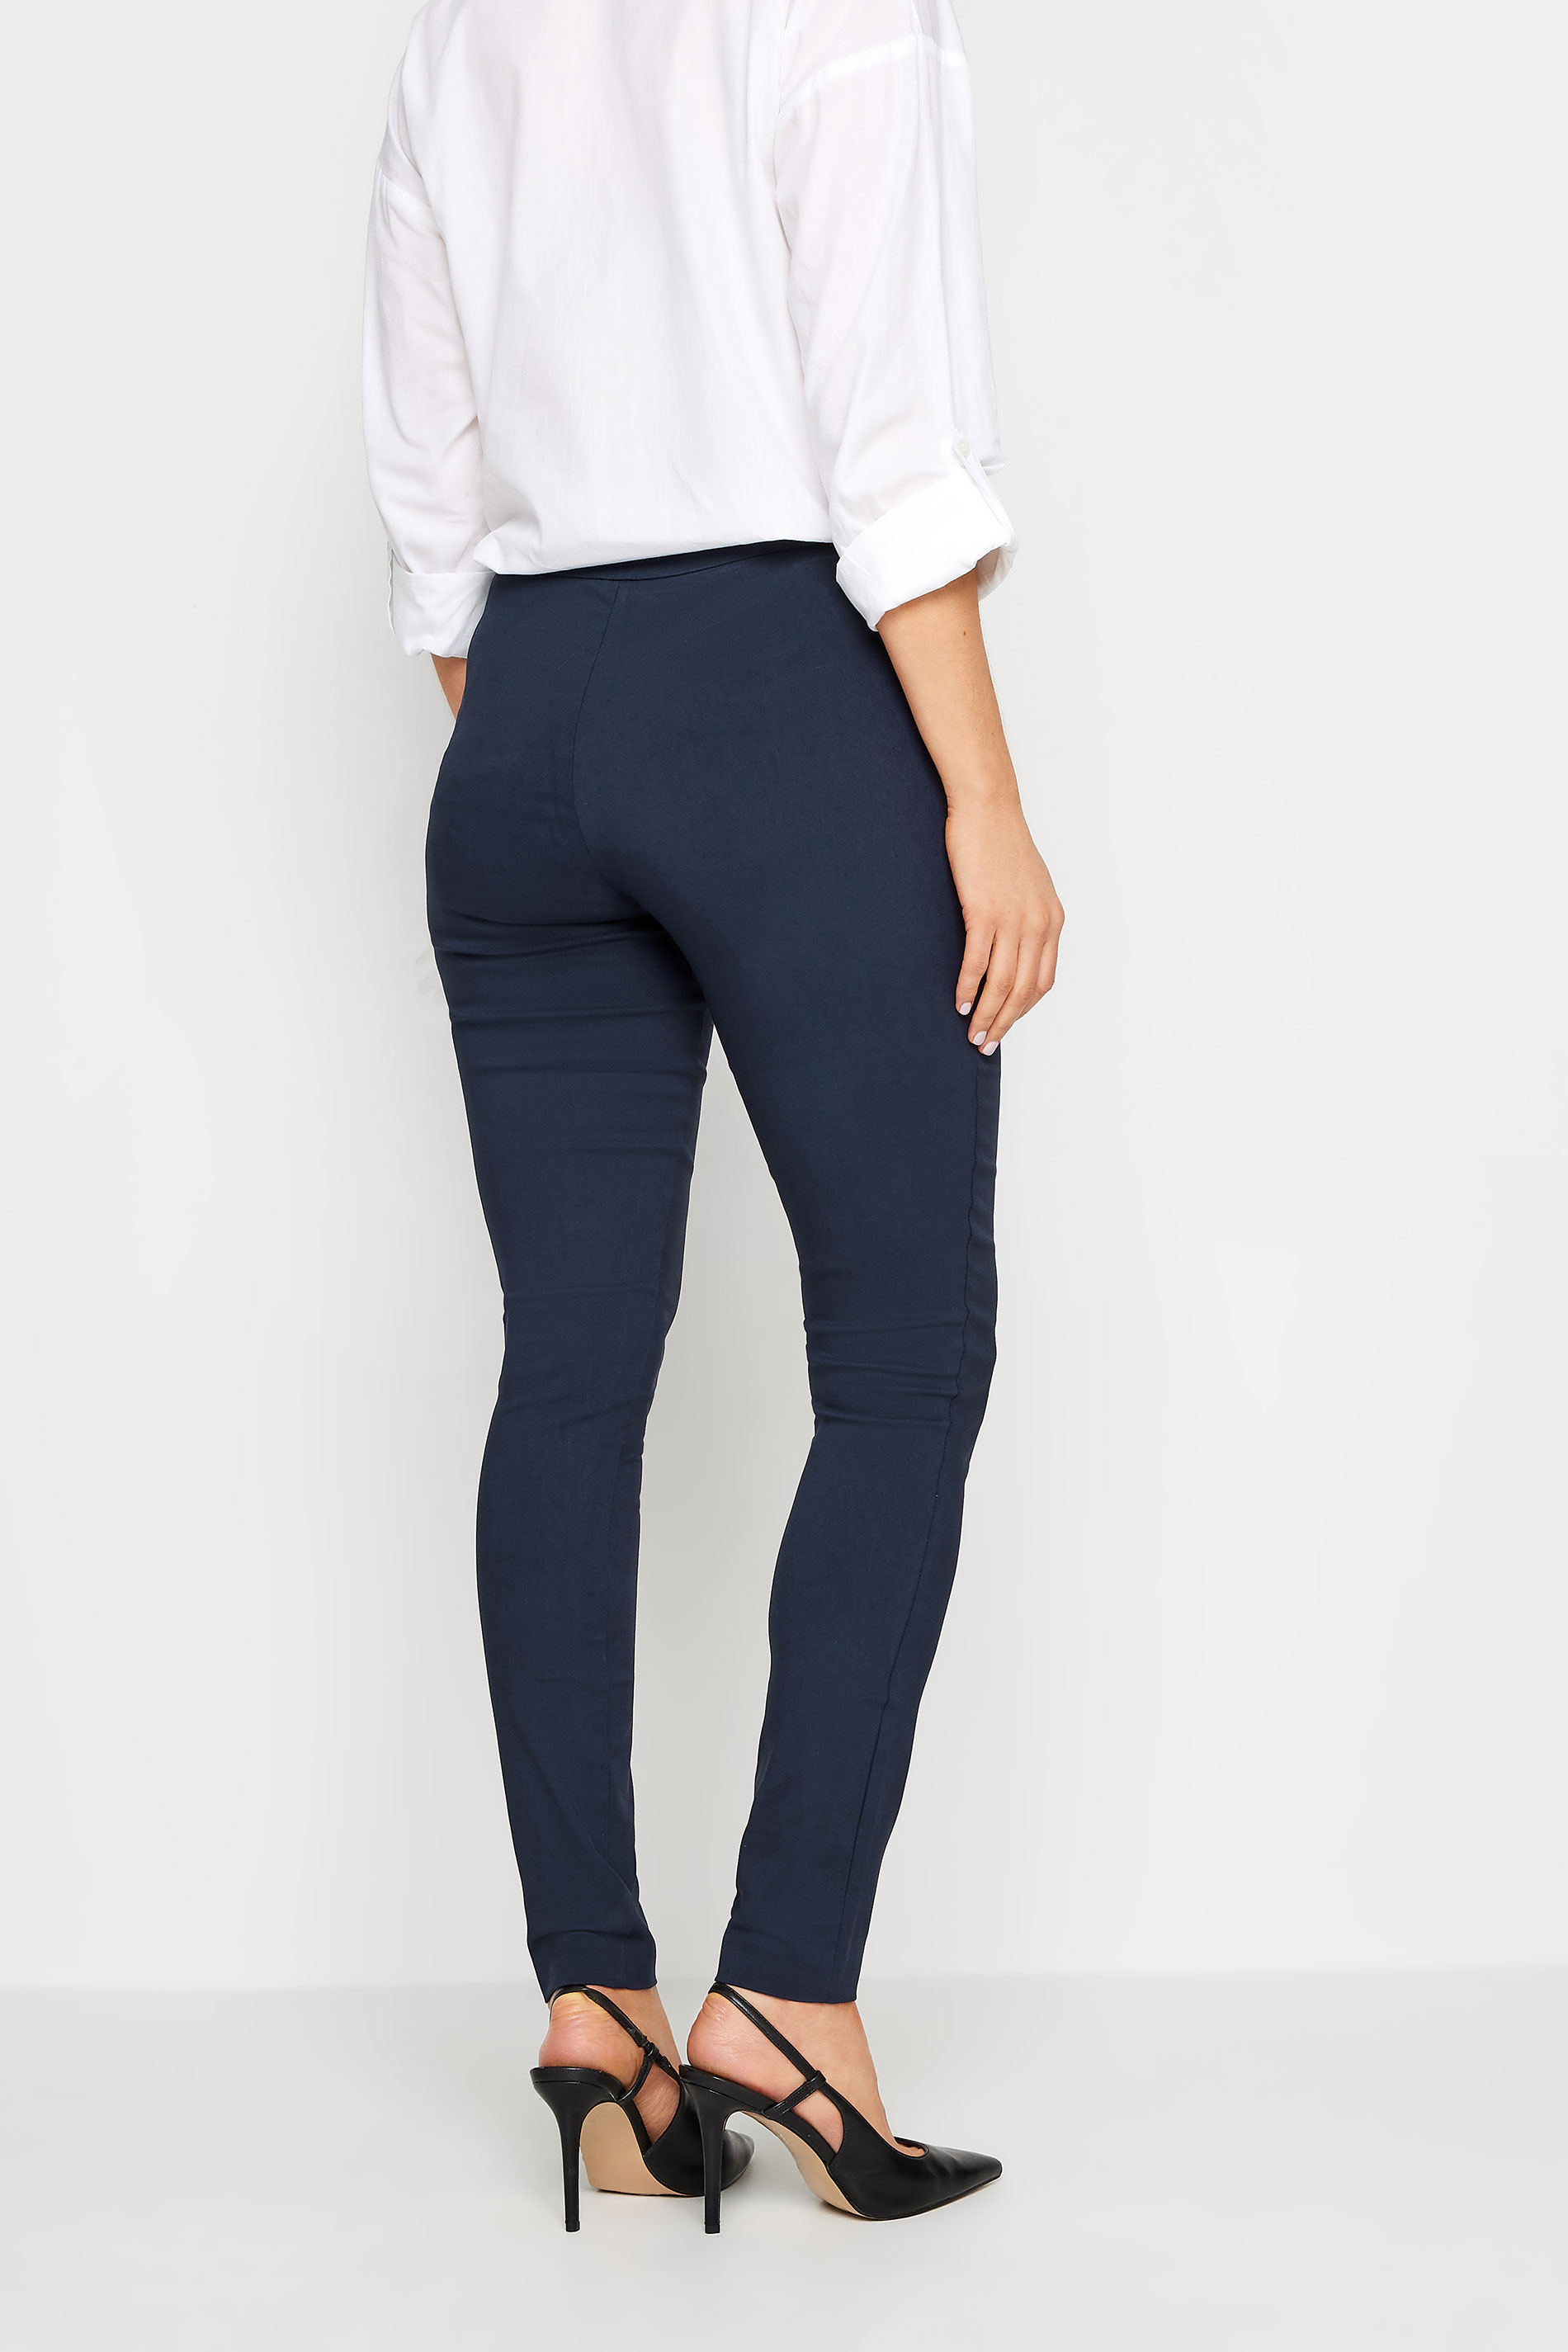 Long Tall Sally - LTS Tall Navy Stretch Skinny Leg Trousers - Women's :  : Fashion